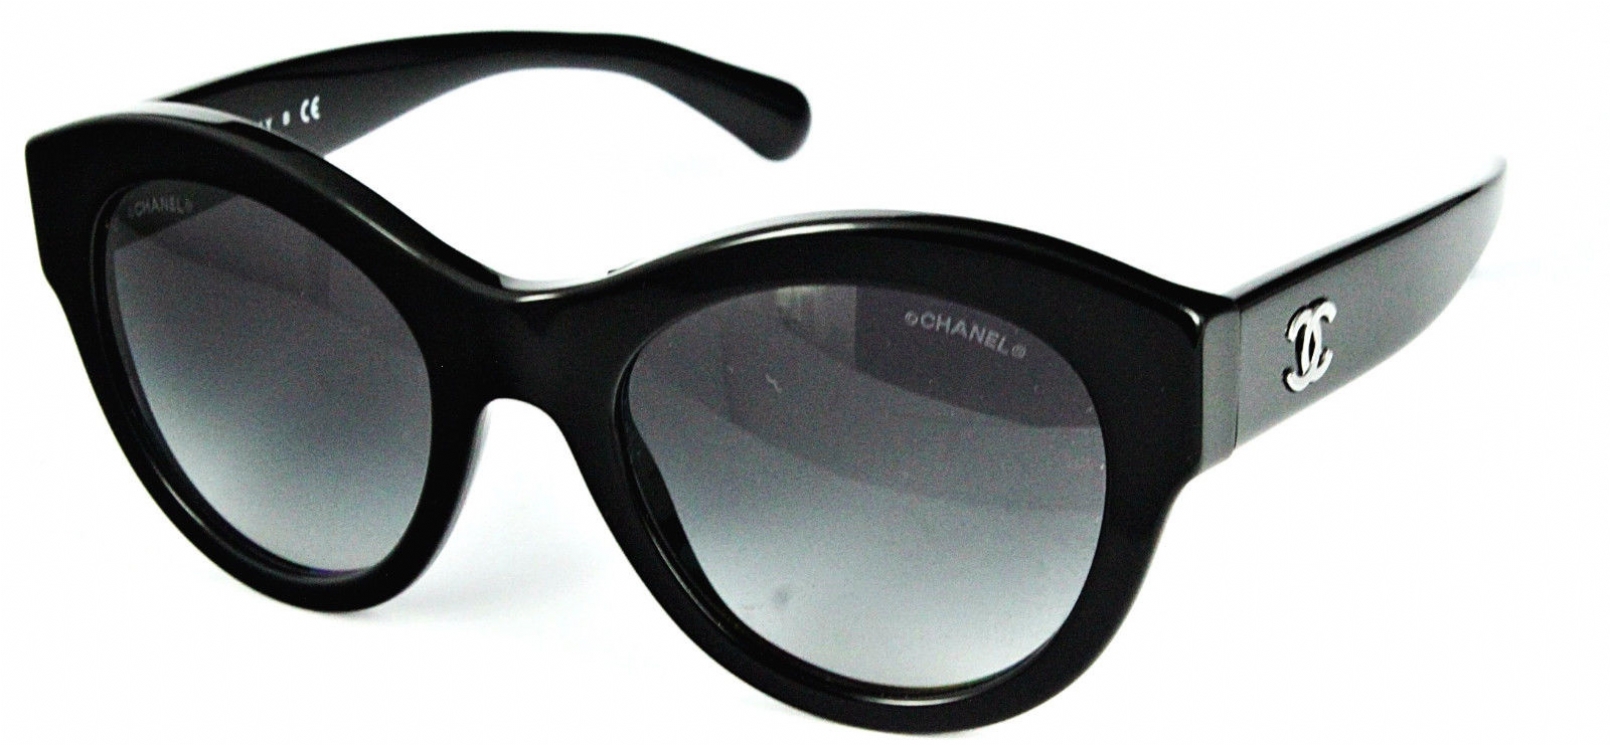 Chanel 5371 Sunglasses